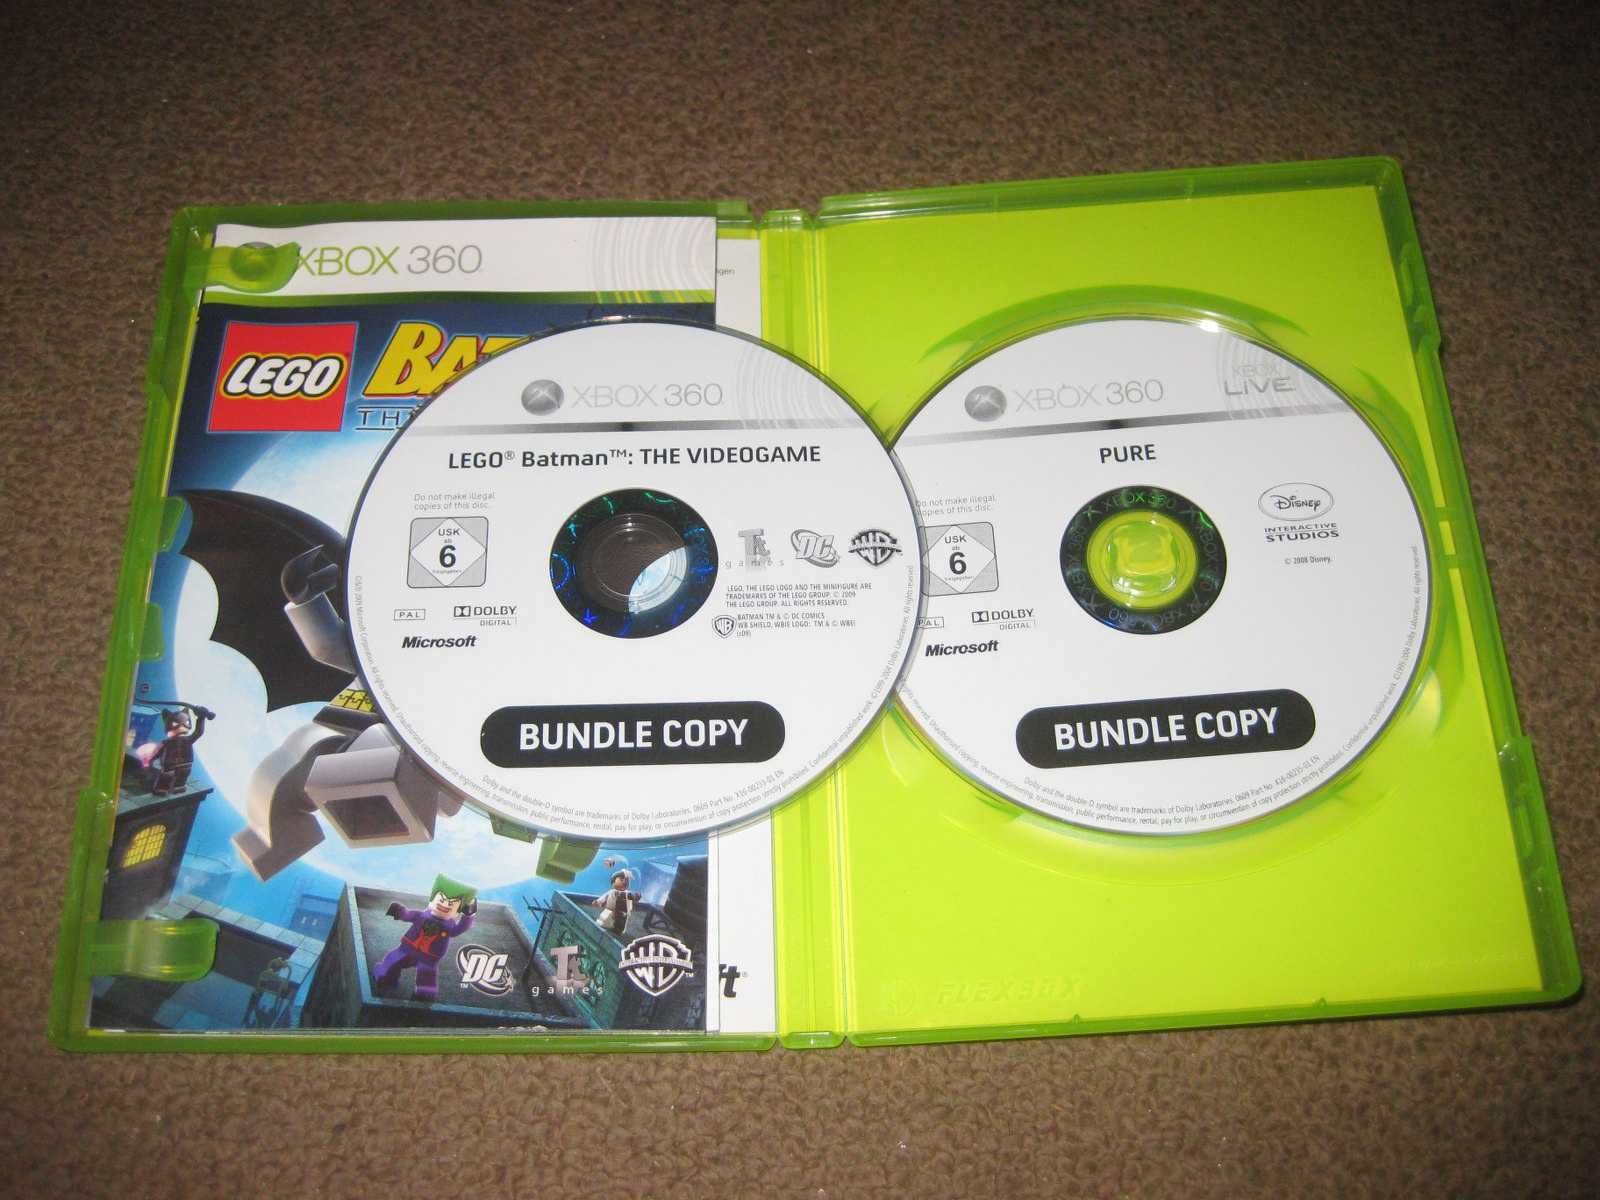 Jogo "Pure + Lego Batman: The Videogame" para a XBOX 360/Completo!